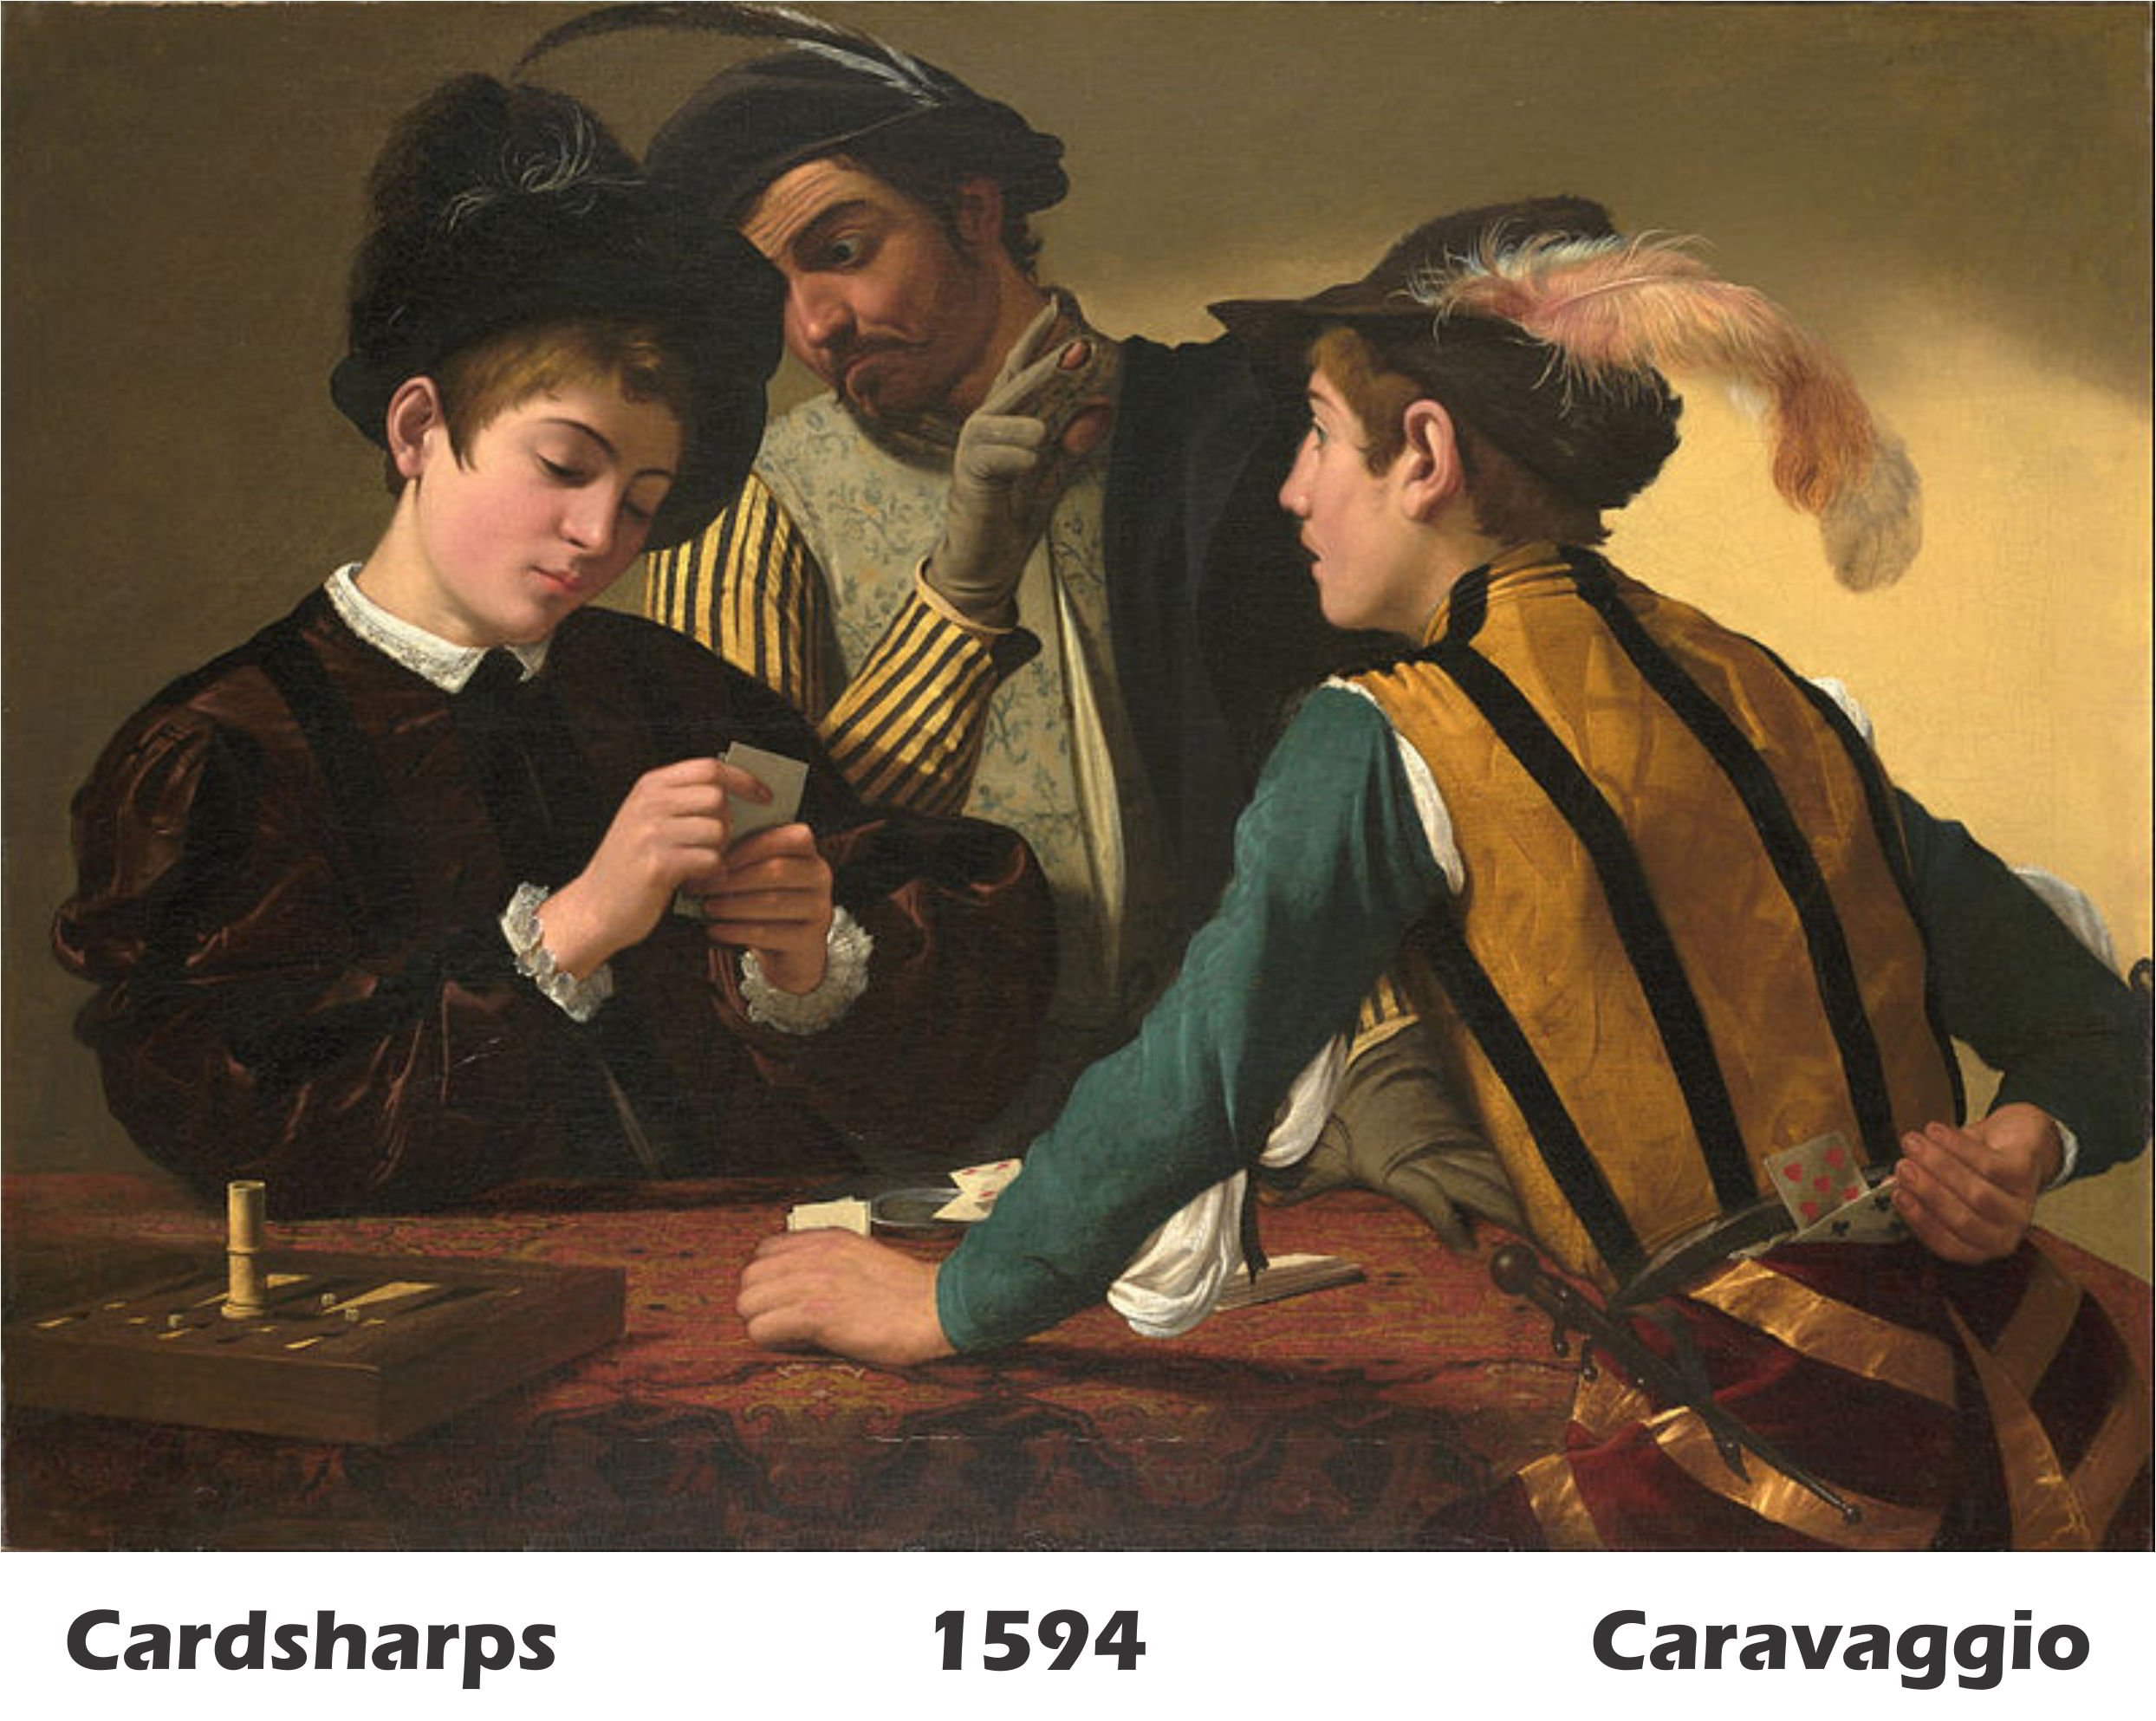 cardsharps by Caravaggio